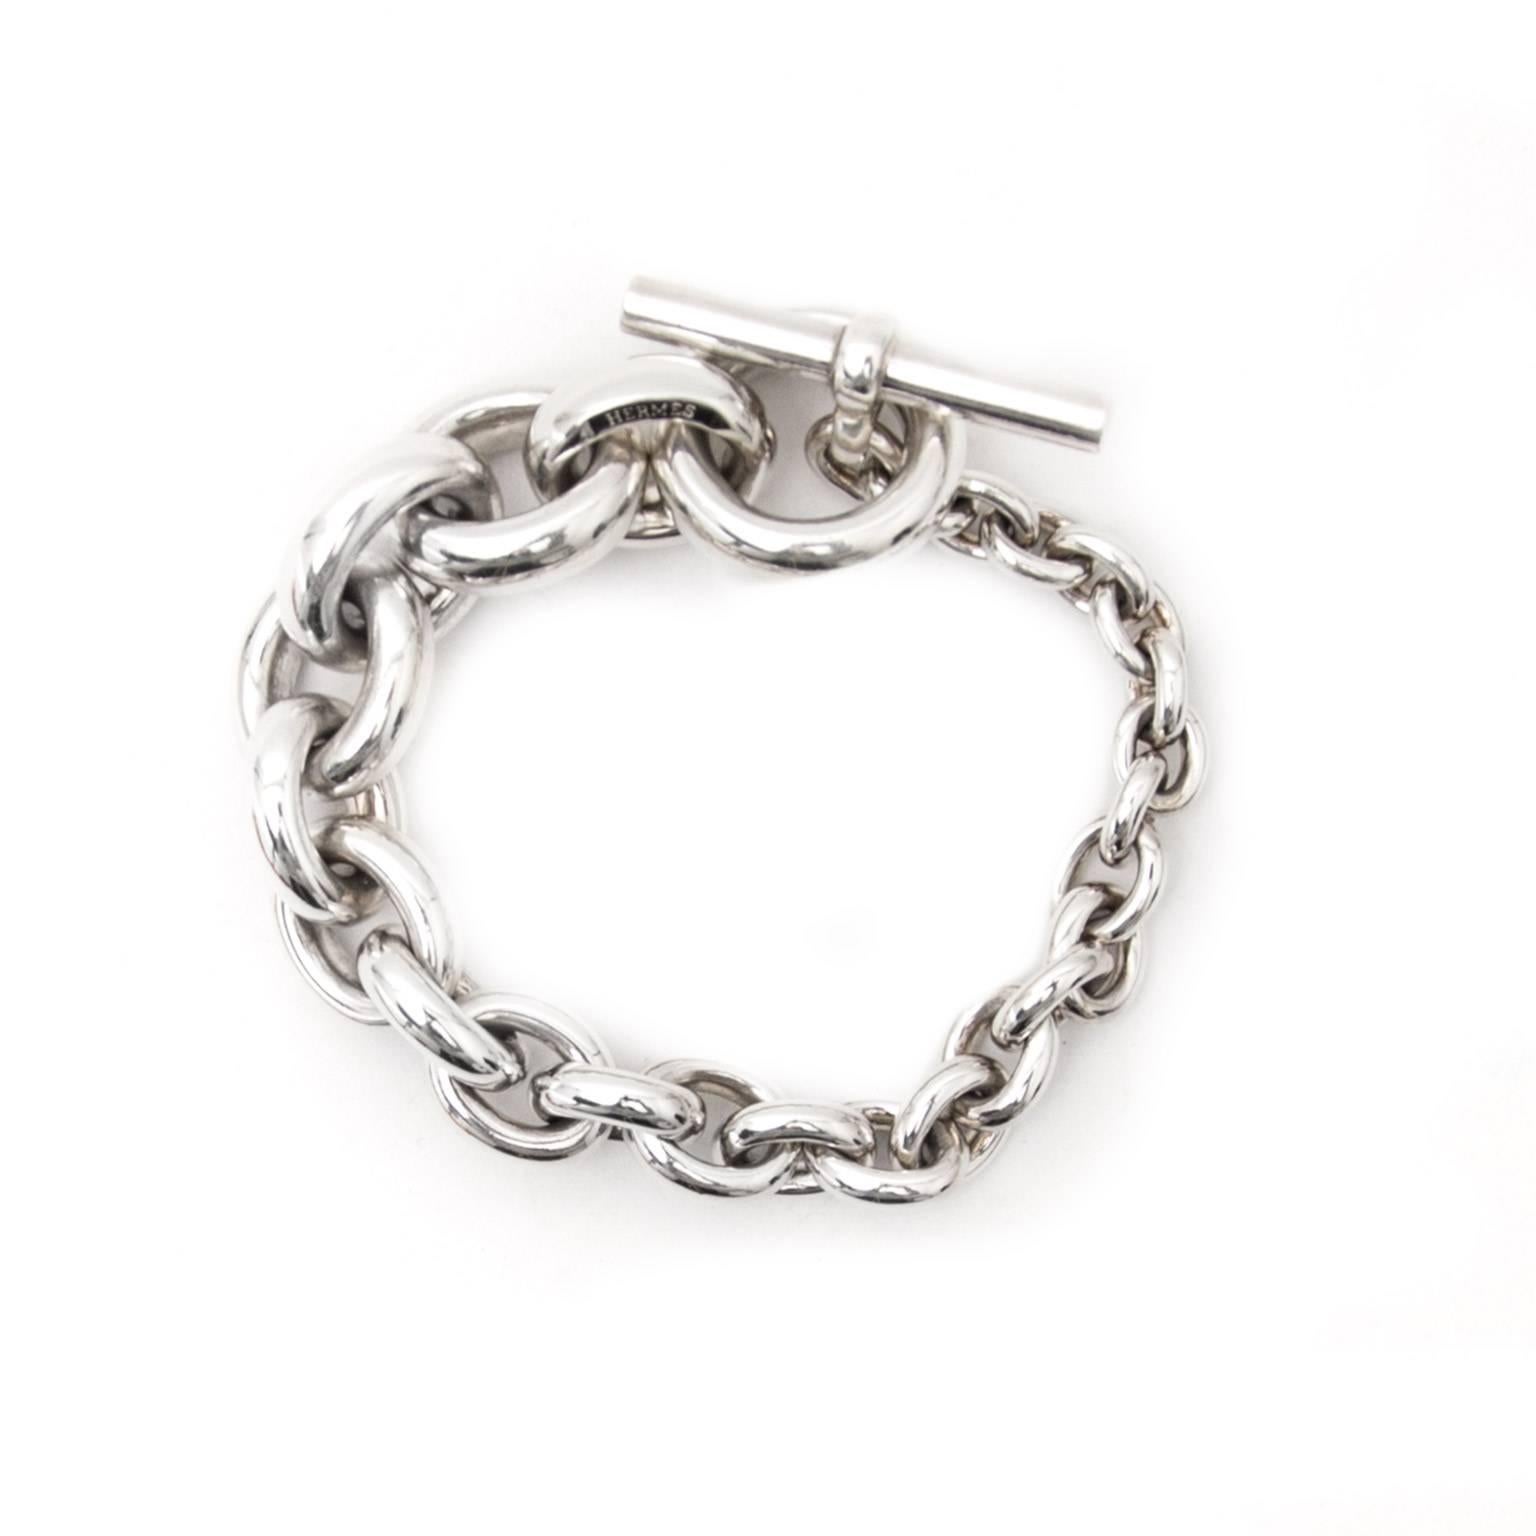 Contemporary Hermès Silver Link Toggle Bracelet